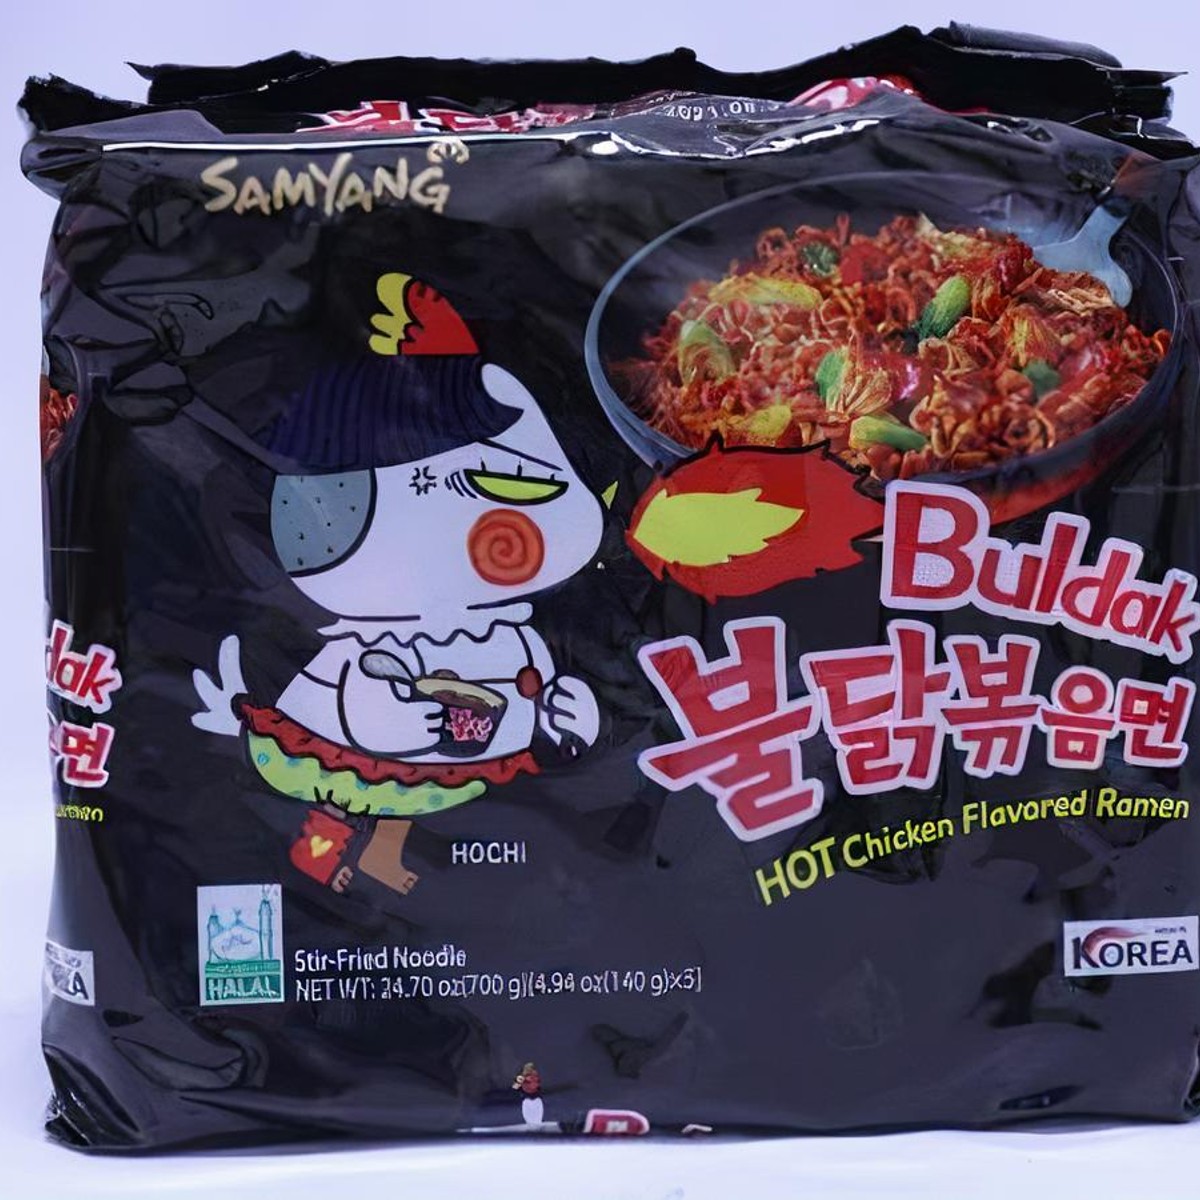 Samyang Hot Chicken Ramen - Buldak Kimchi Flavor 5 Pack 24.70oz